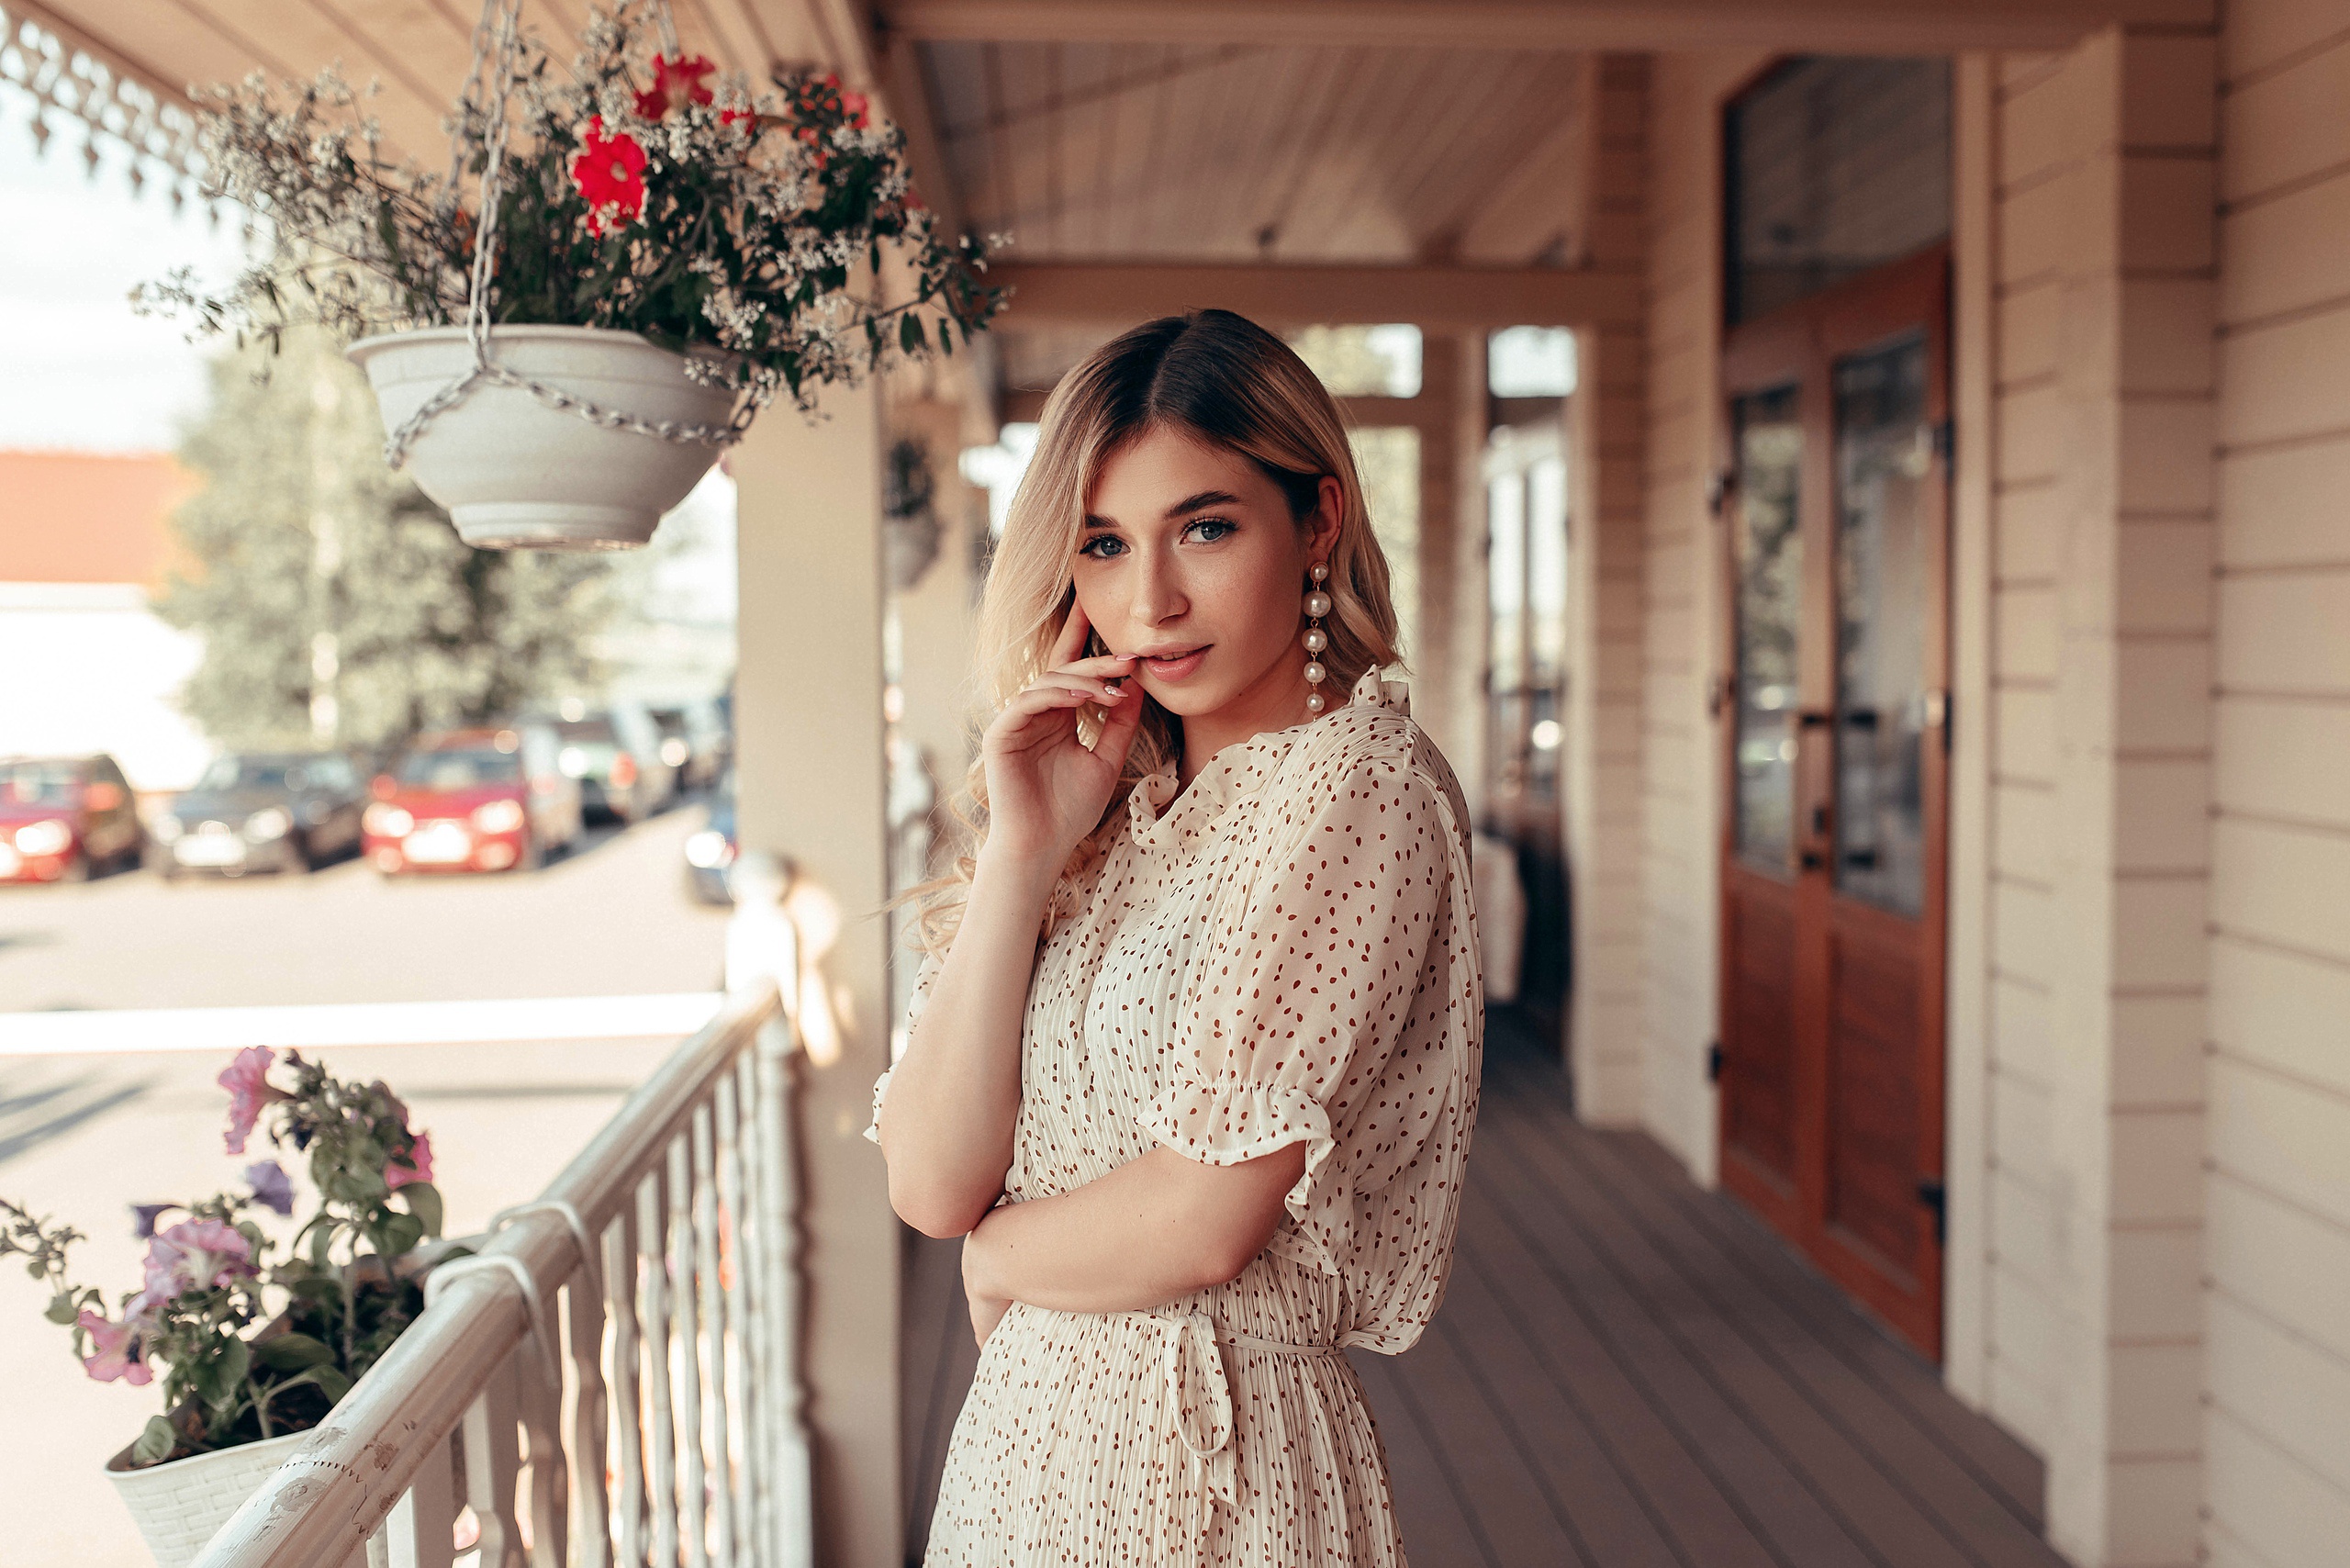 Sasha Rusko Women Porch Long Earrings Touching Face Dyed Hair Flowers Outdoors Dress Standing 2560x1708